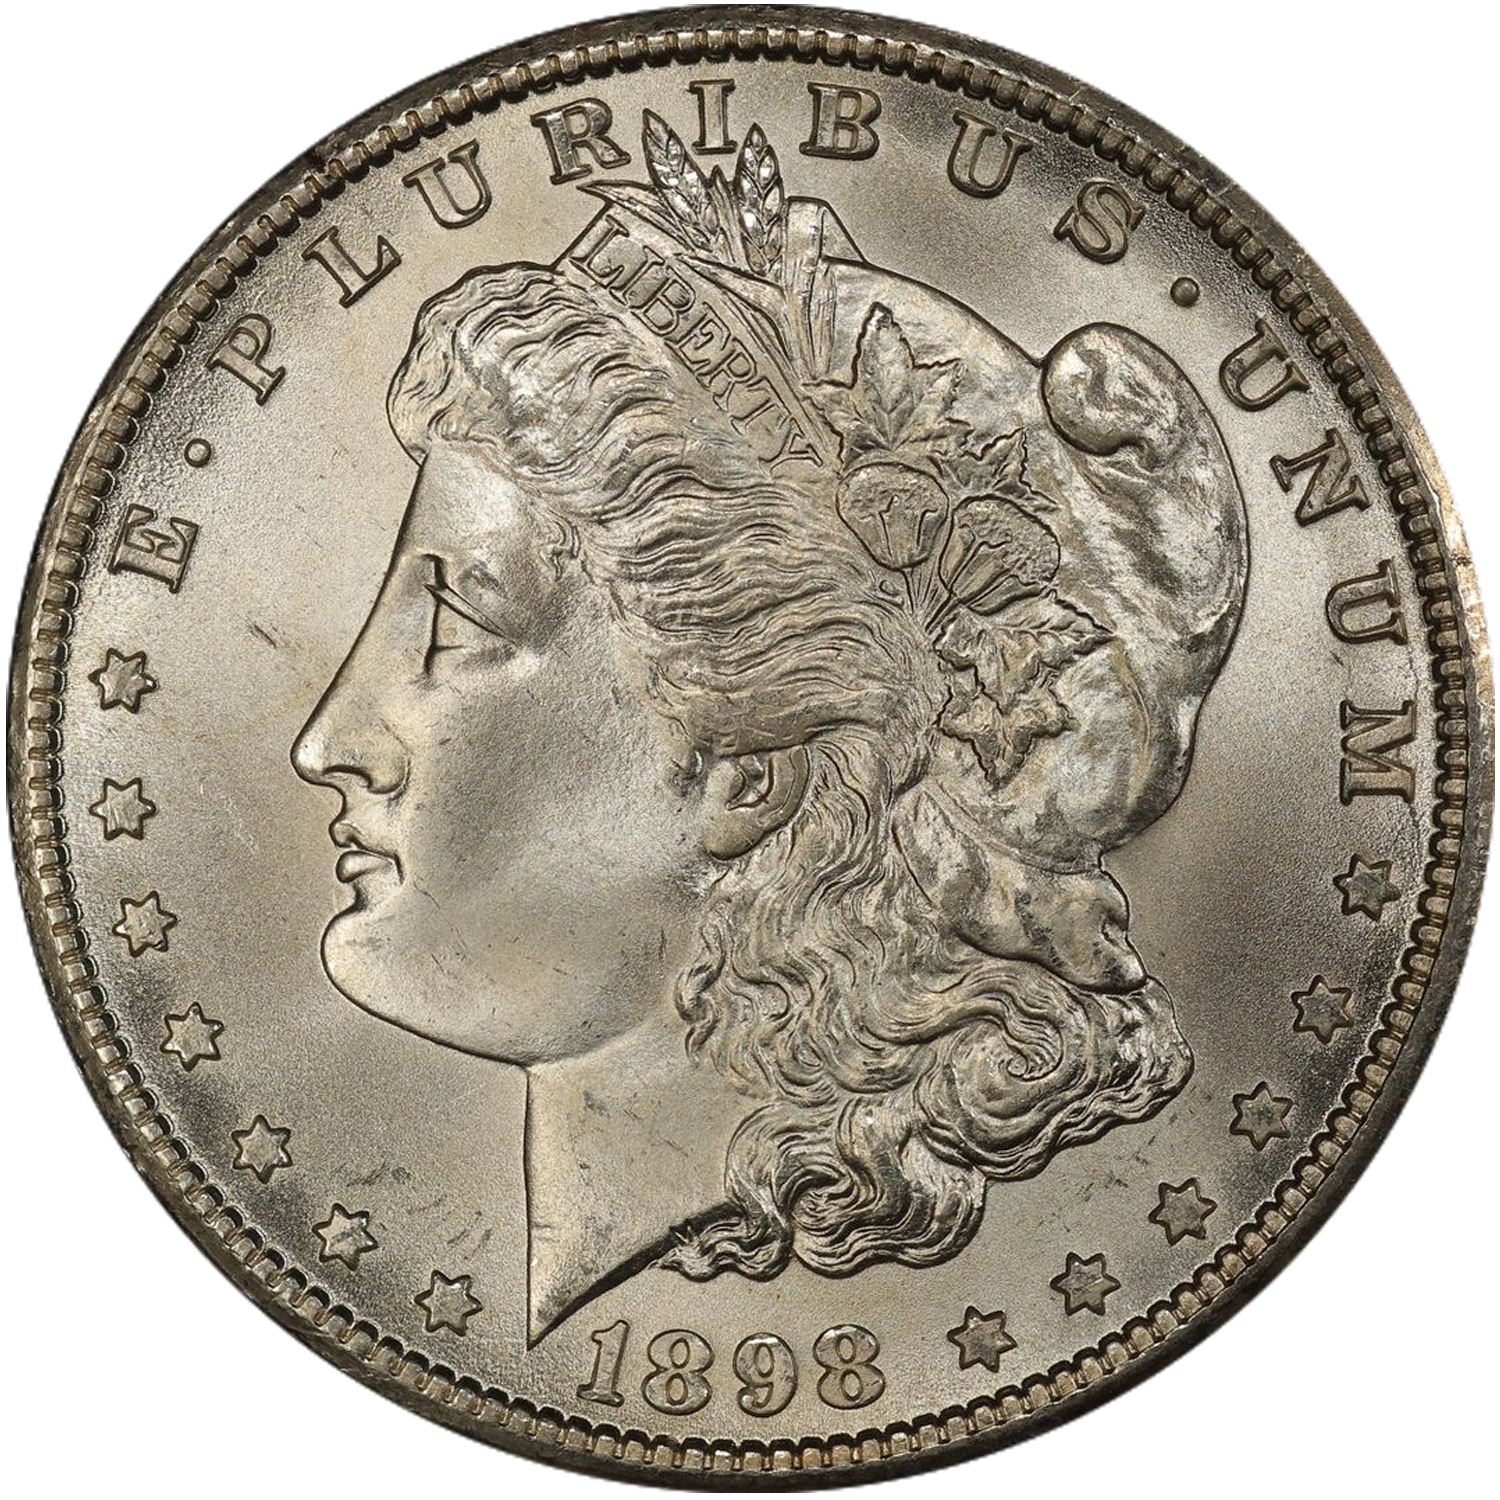 1898 new orleans mint morgan silver dollar value